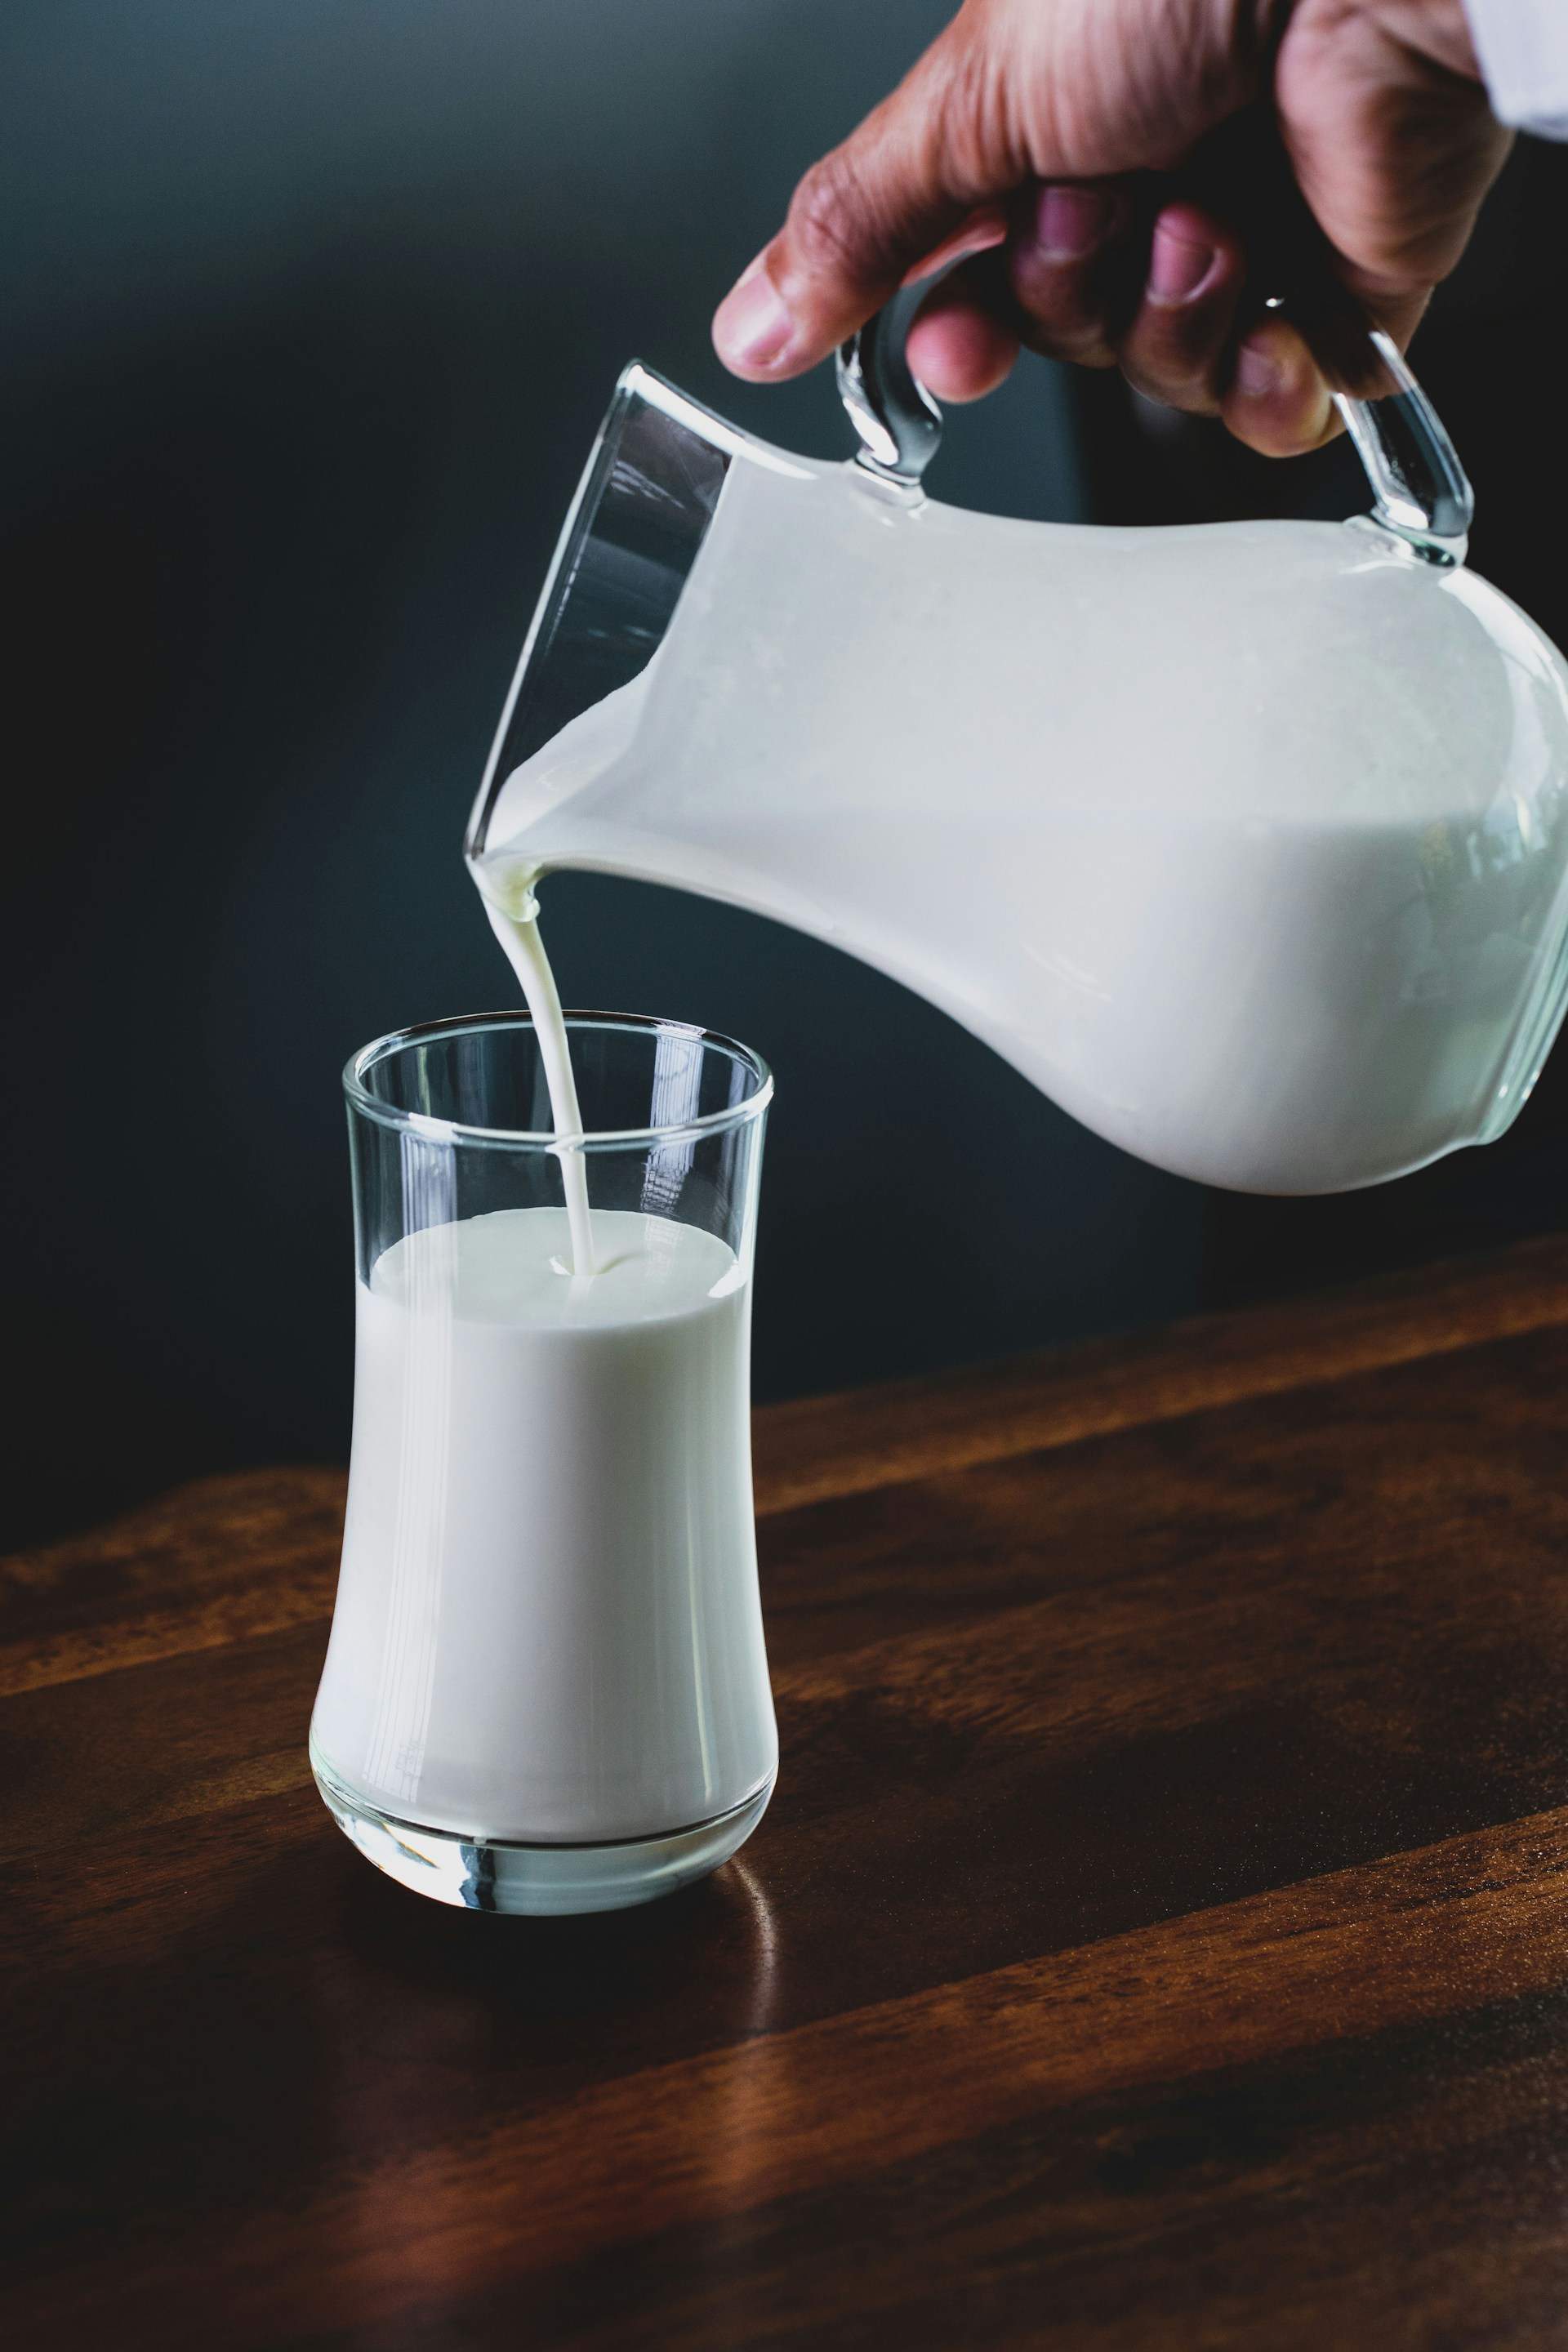 La OCU elige la mejor marca de leche semidesnatada de supermercado